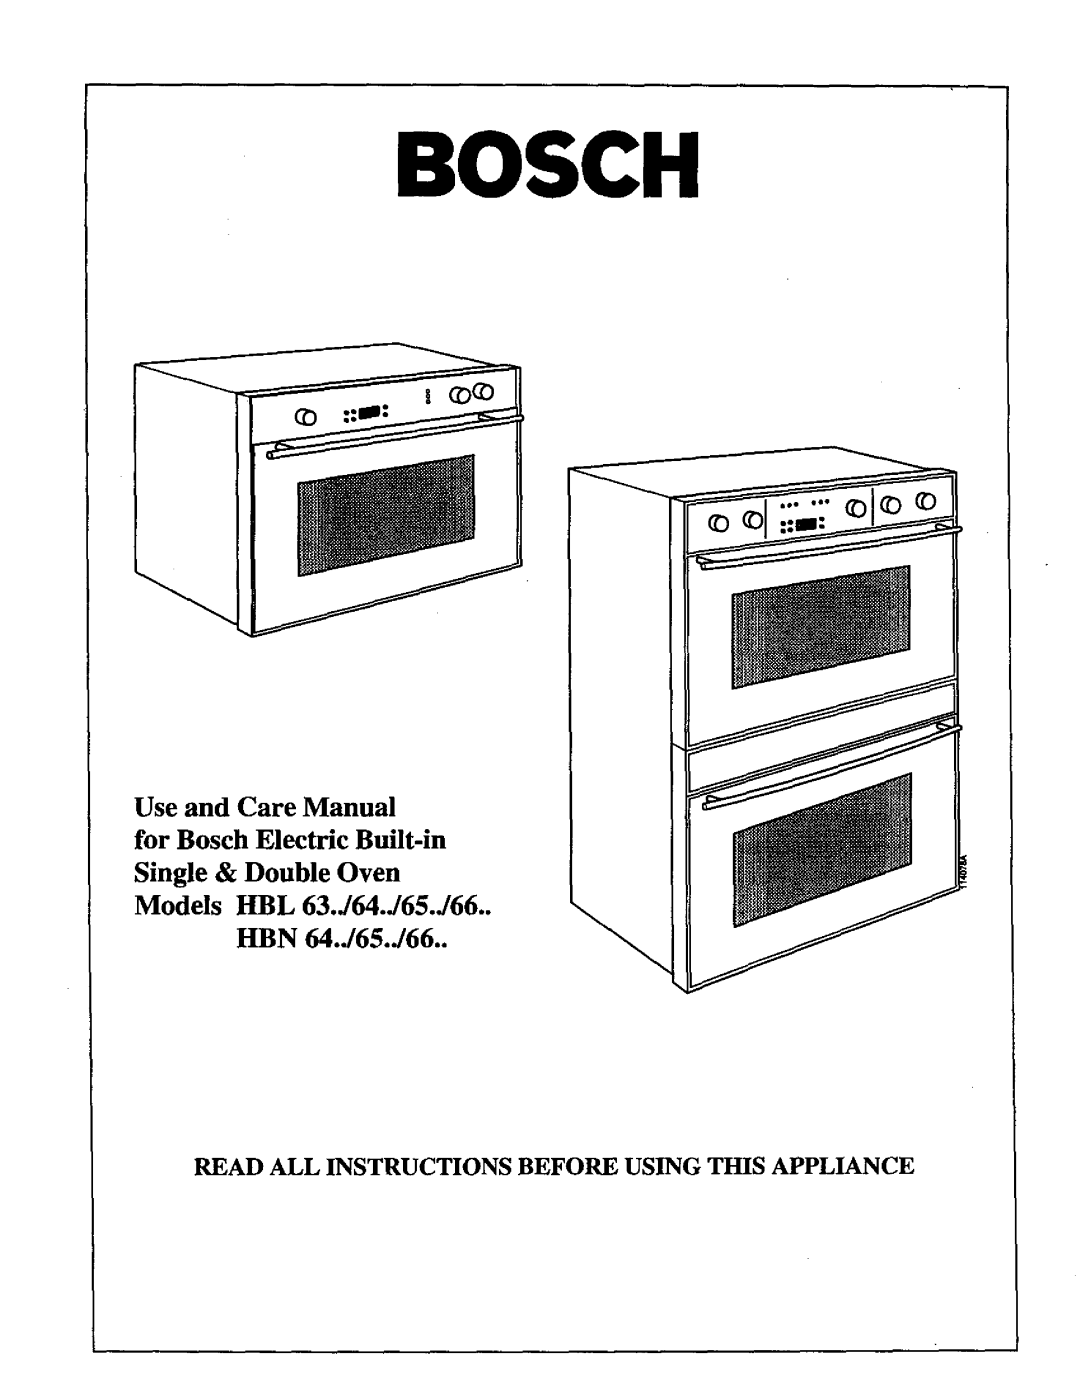 Bosch Appliances HBL 64, HBL 63, HBL 65 manuel dutilisation Single & Double Oven Models HBL HBN 64.365../66, Bosch 